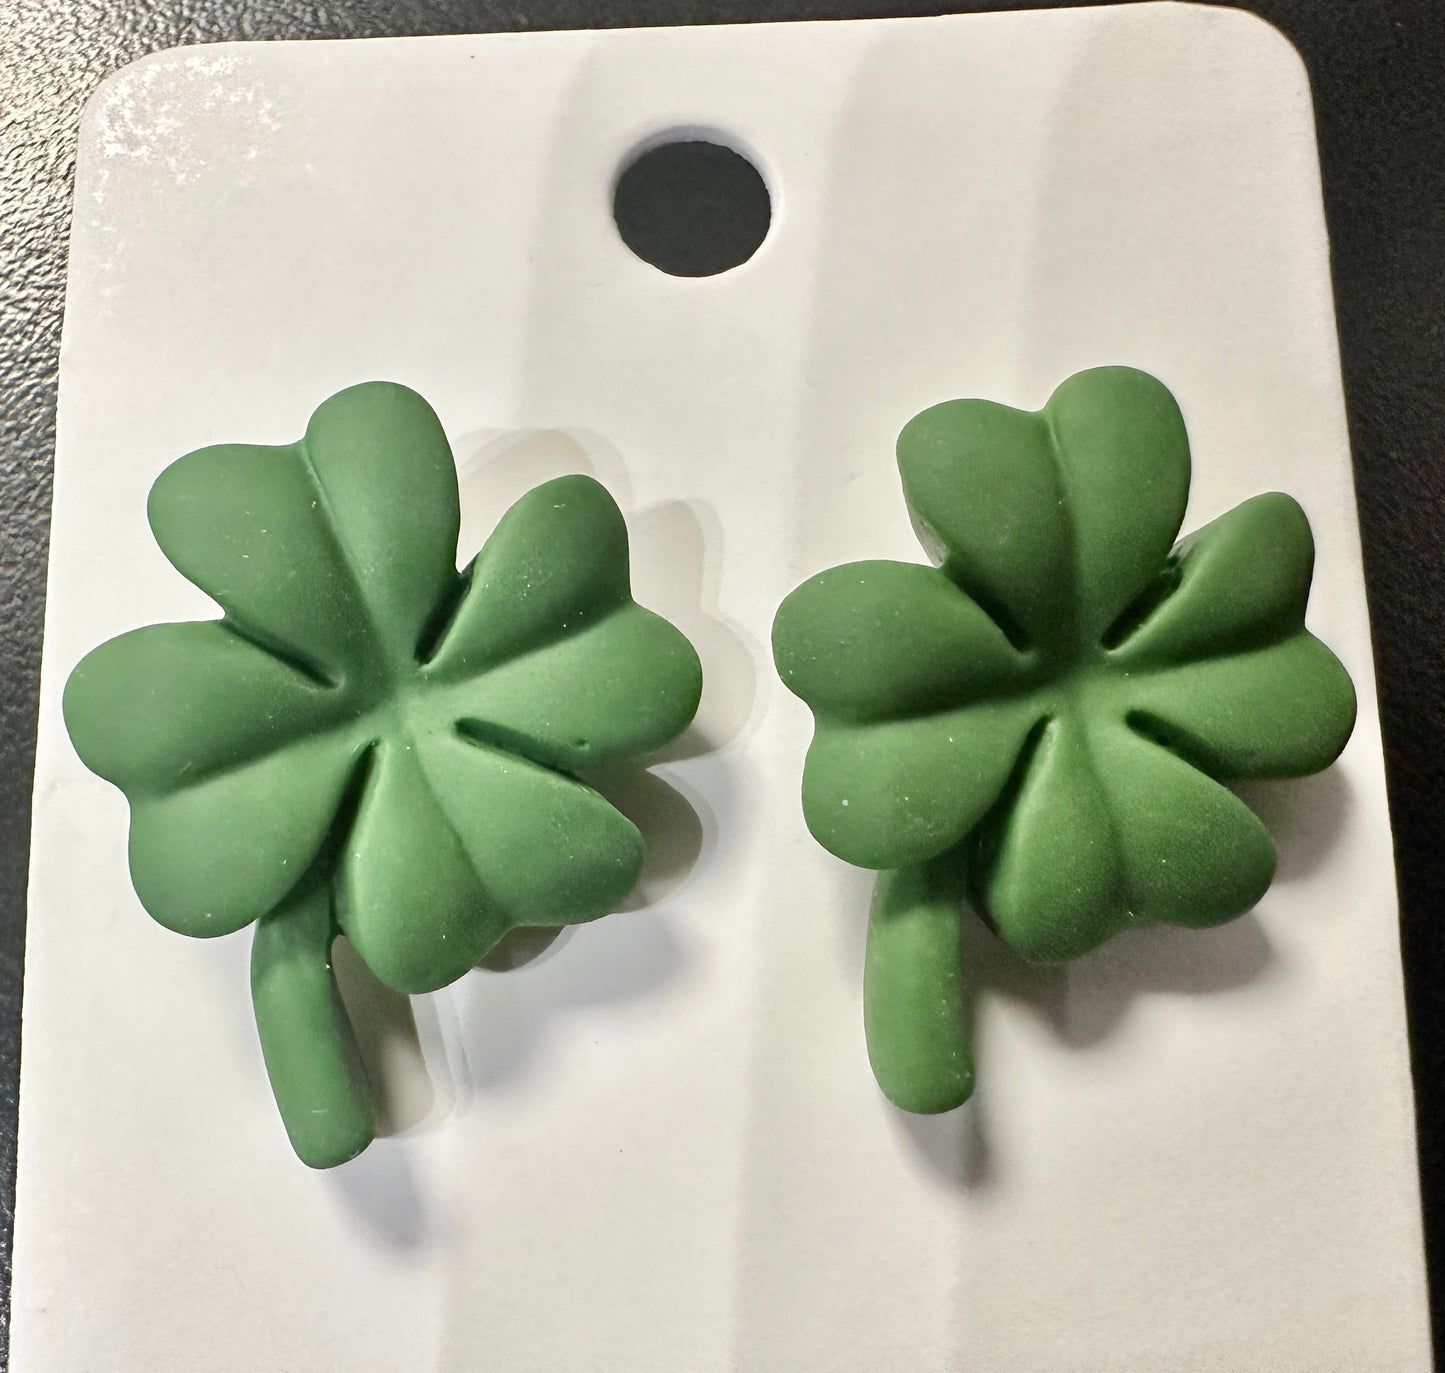 4 Leaf Clover Earrings